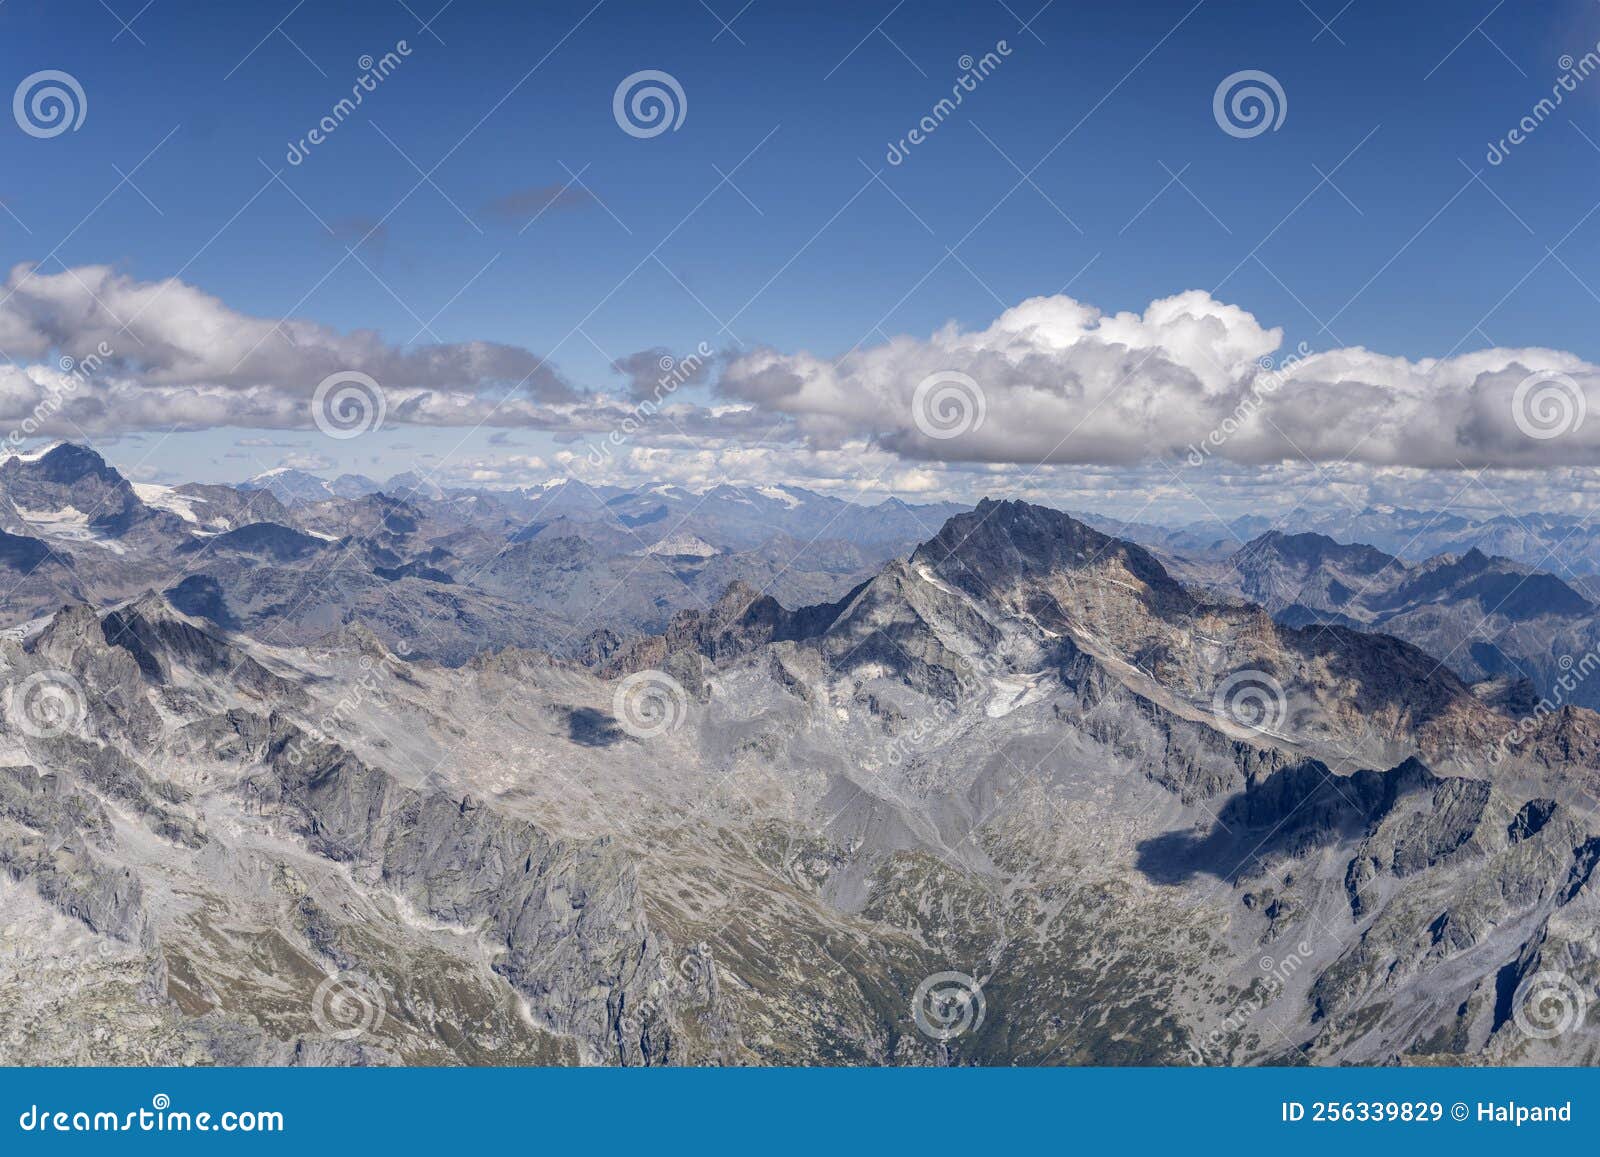 disgrazia peak and range, italy